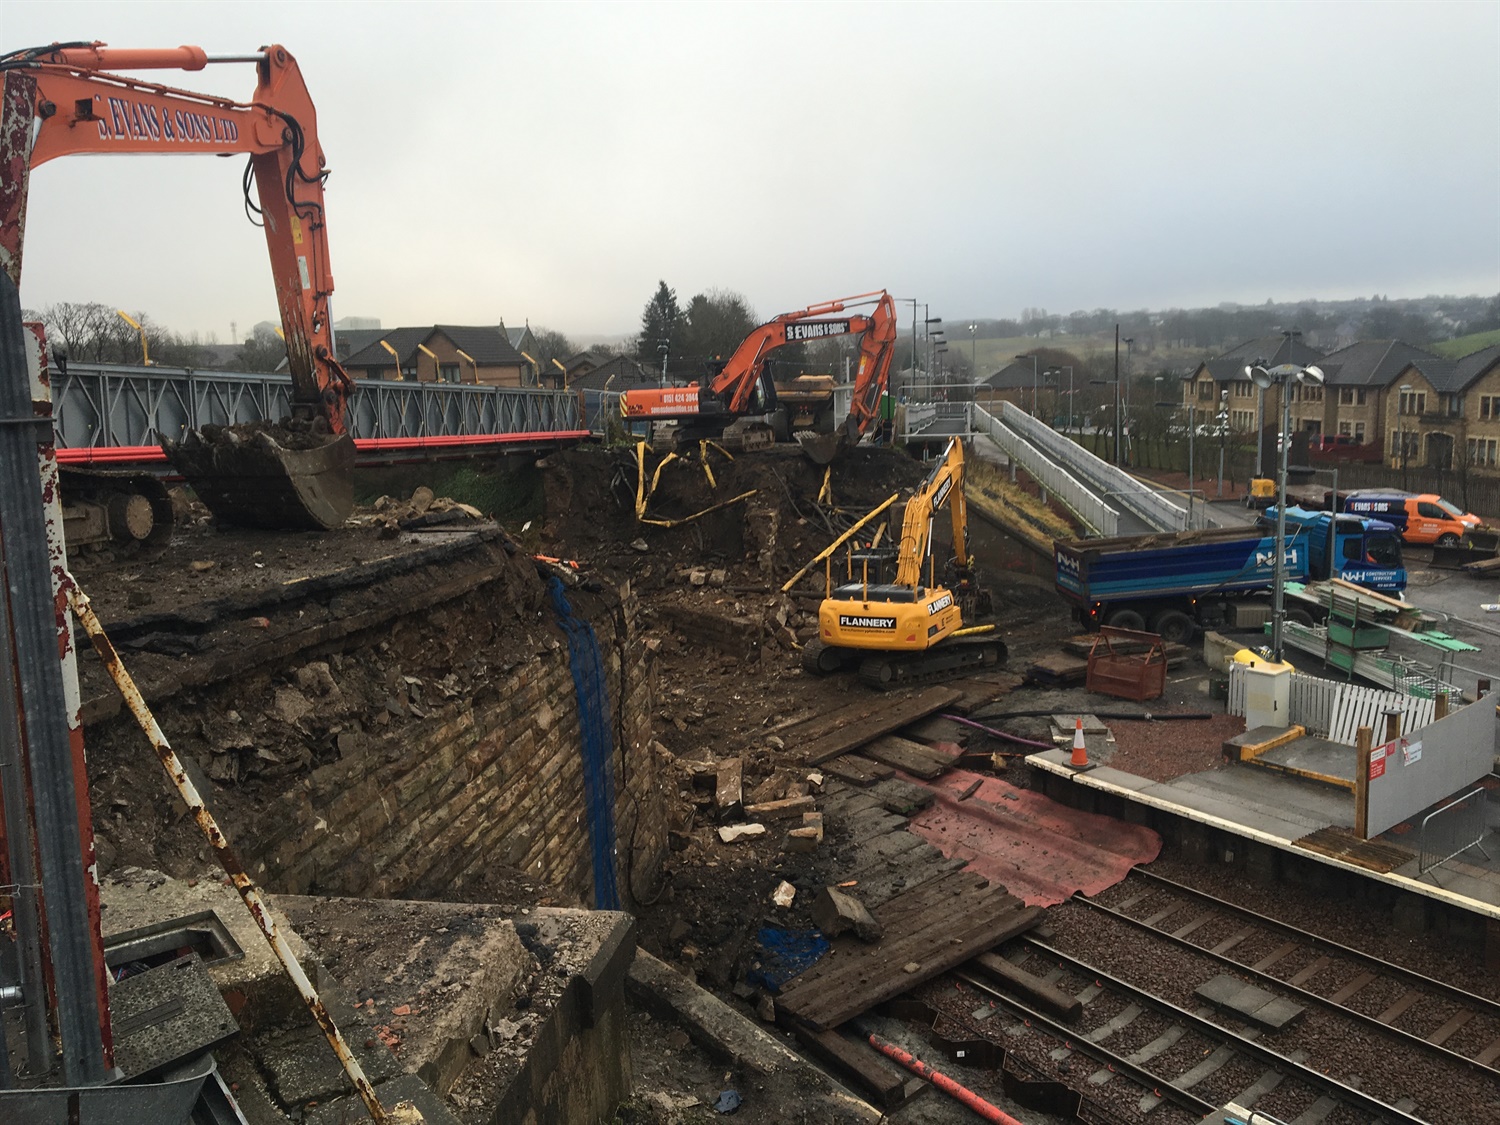 NR demolishes two key bridges as part of Scottish electrification work